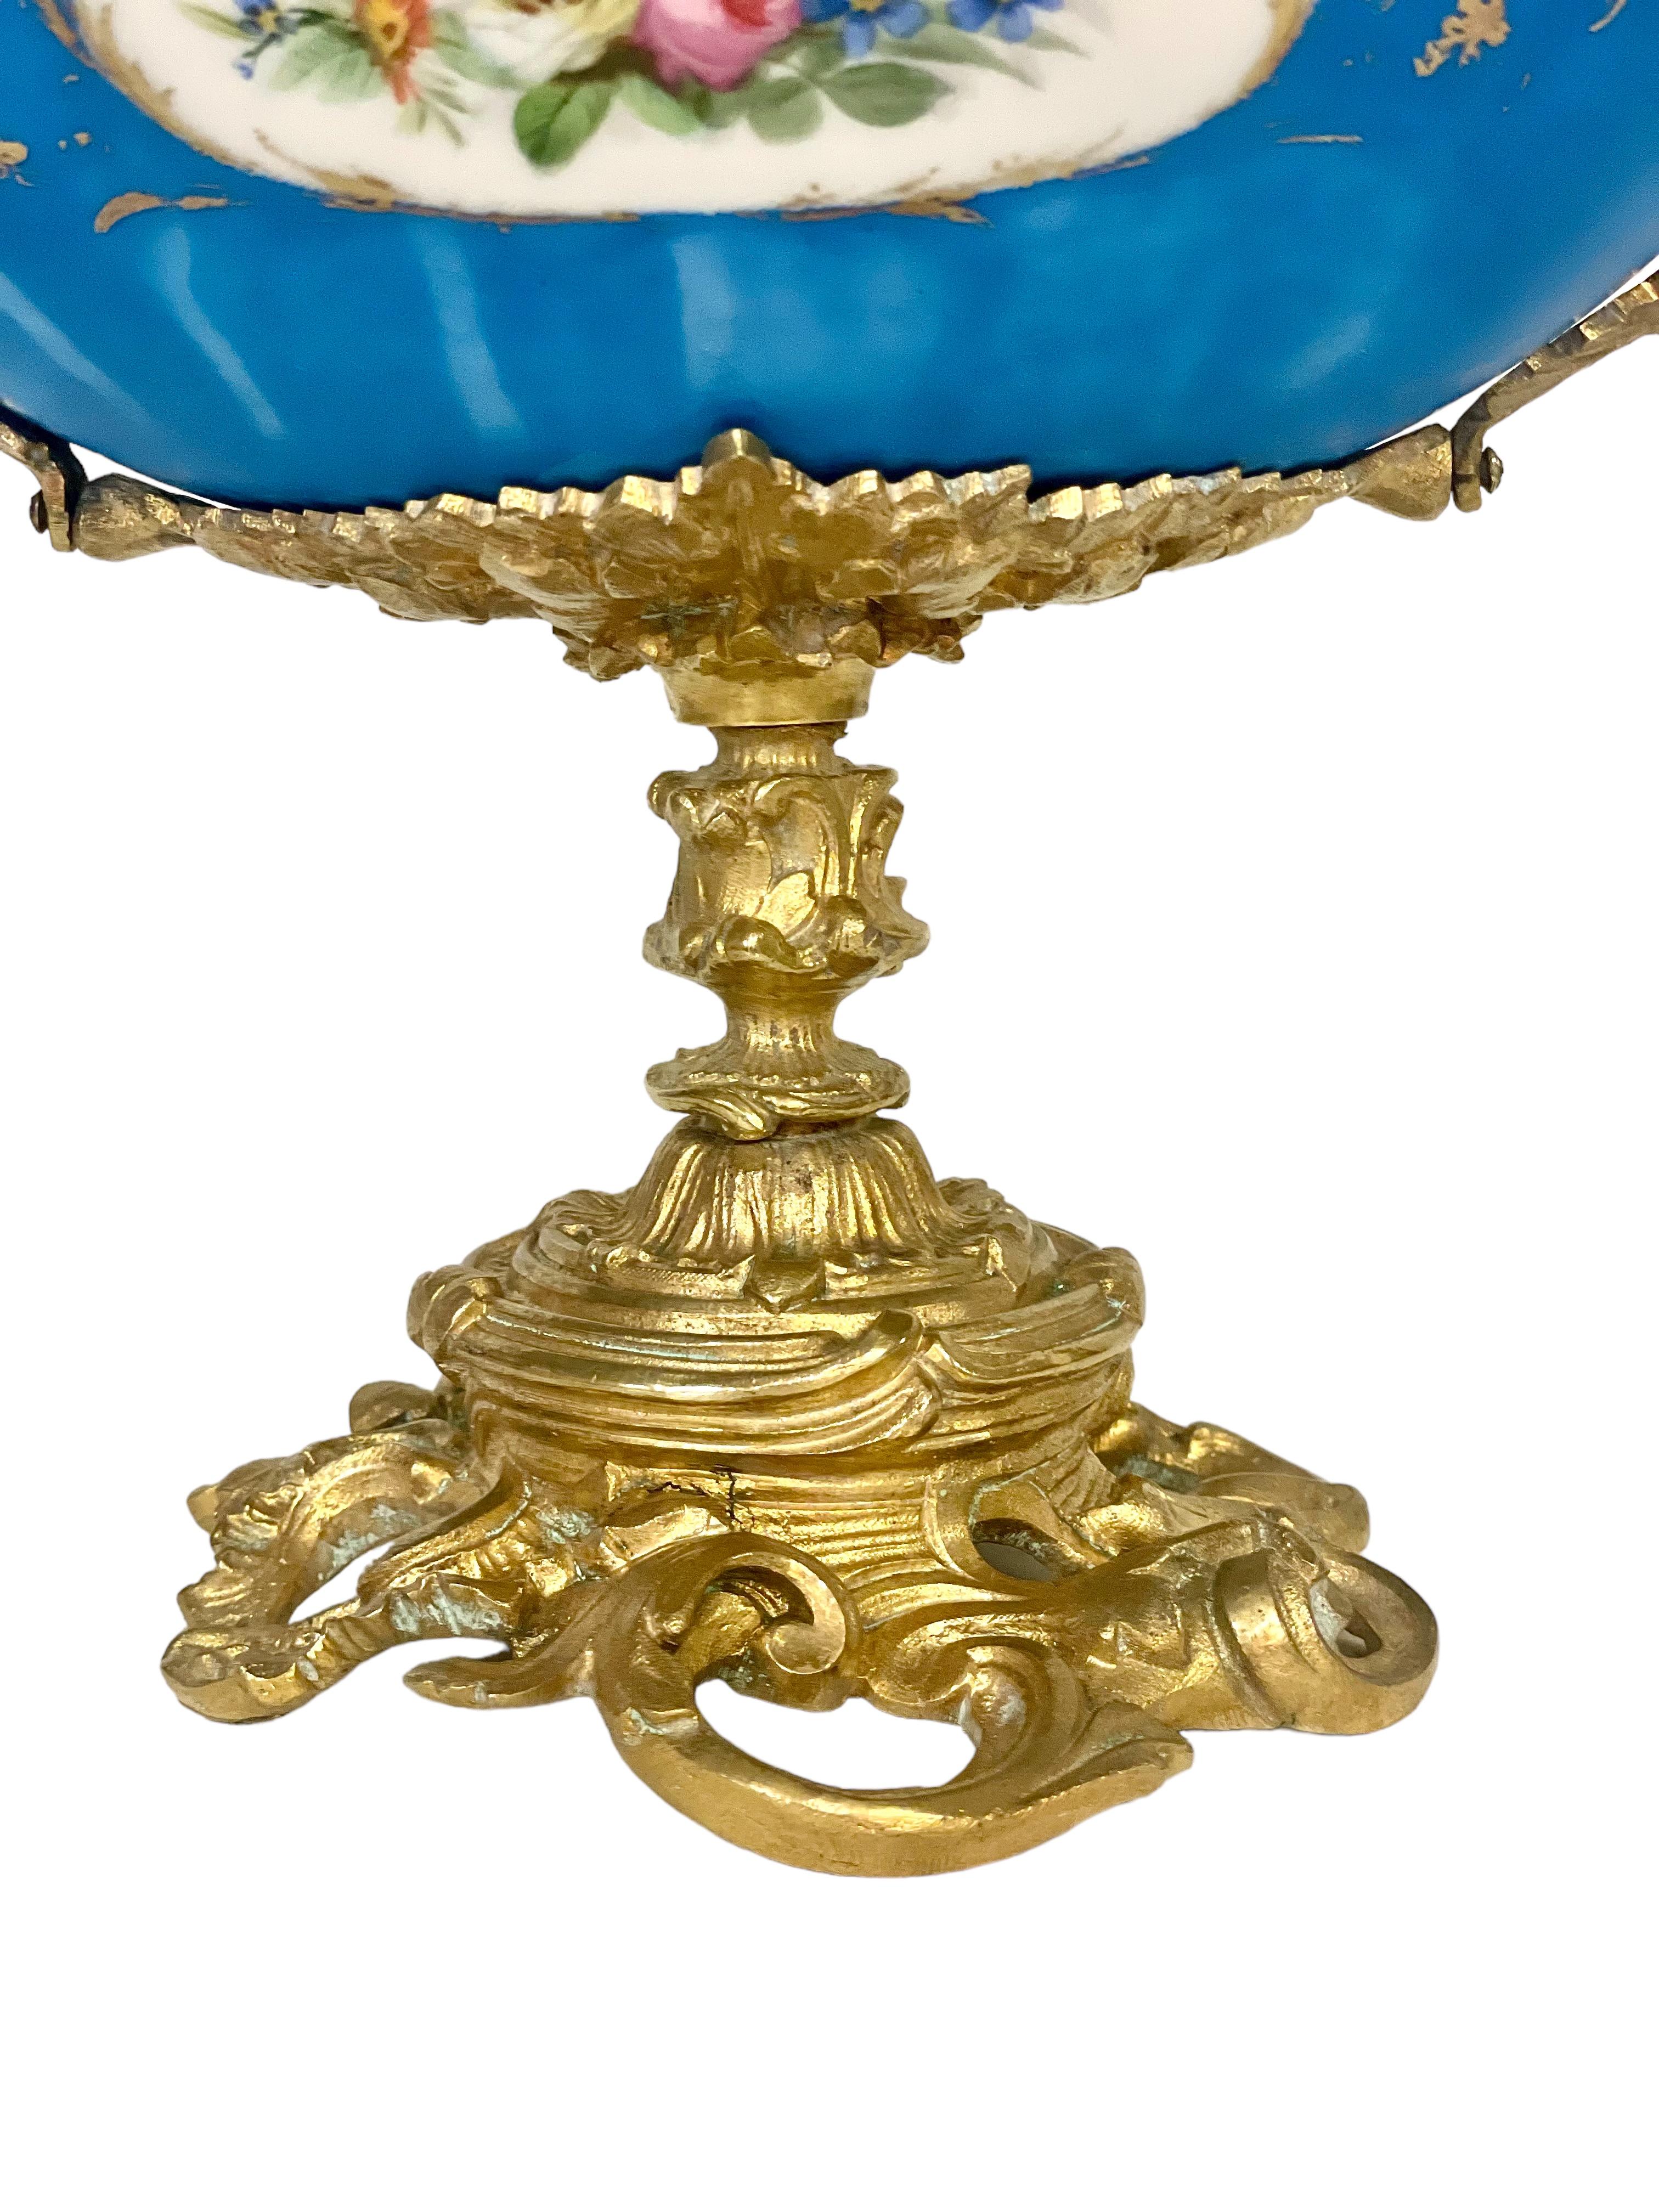 19th Century Napoleon III Sèvres Porcelain and Bronze Centerpiece For Sale 7